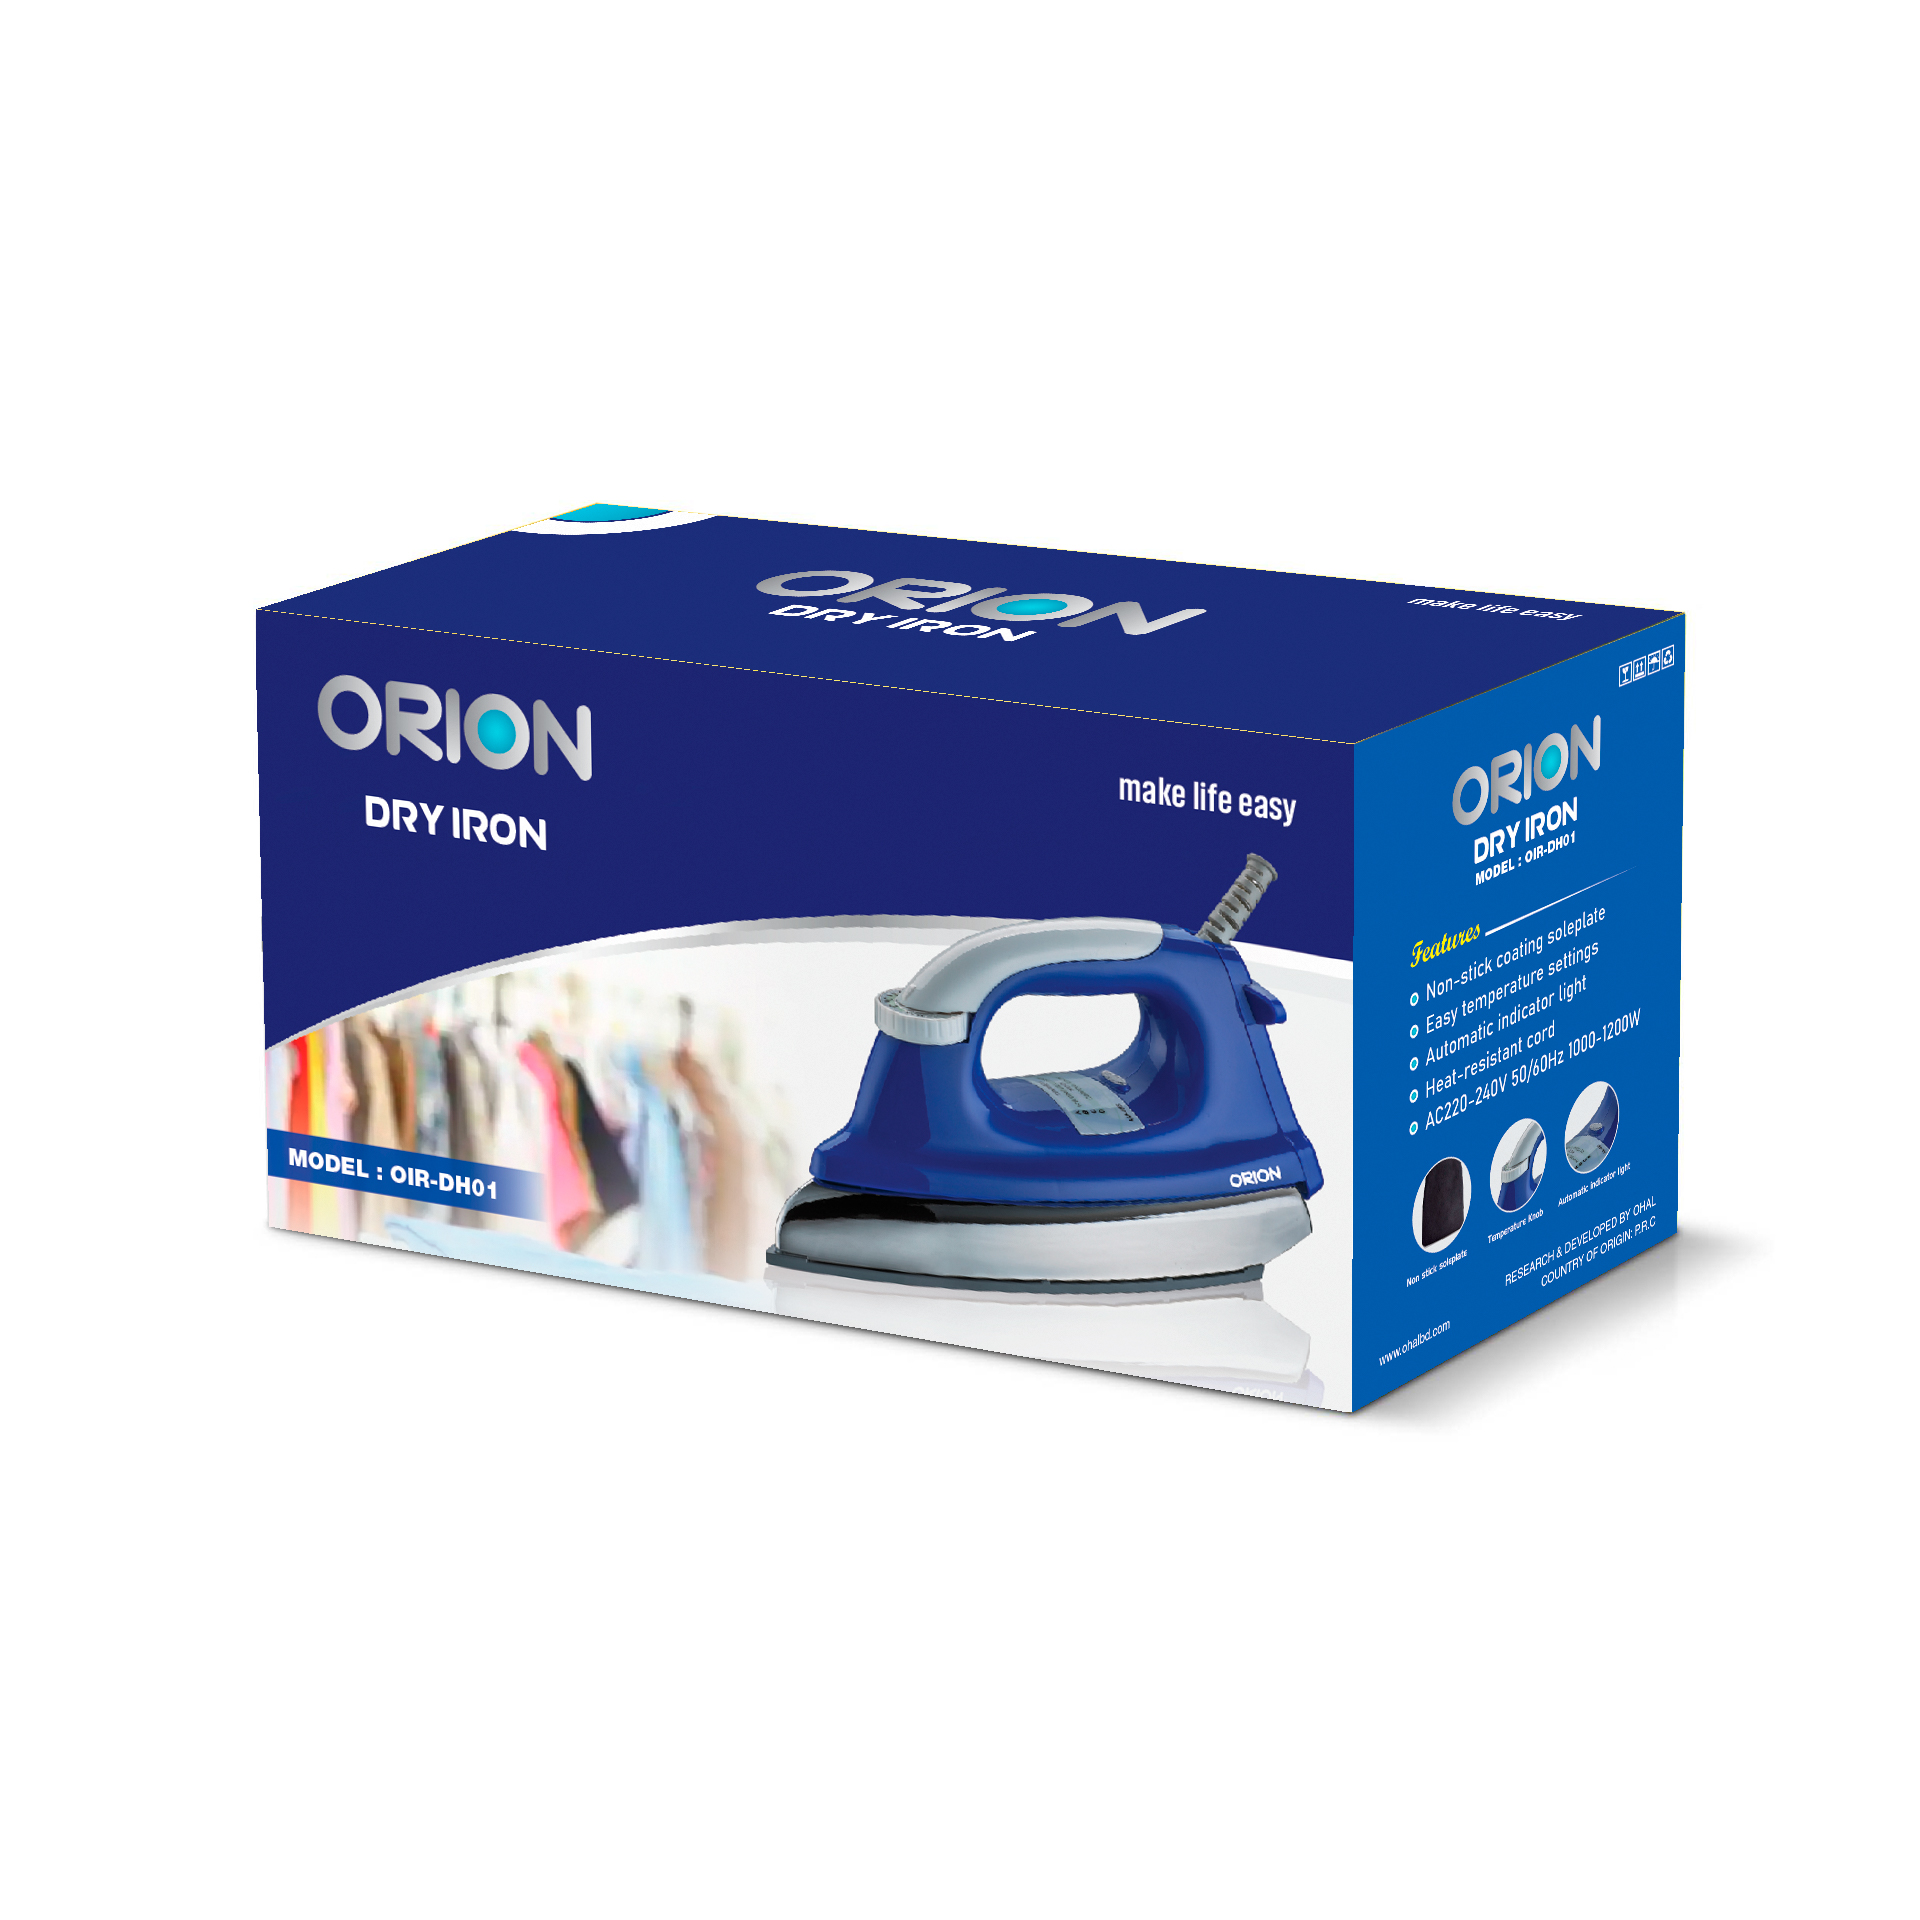 Orion Dry Iron OIR-DH01